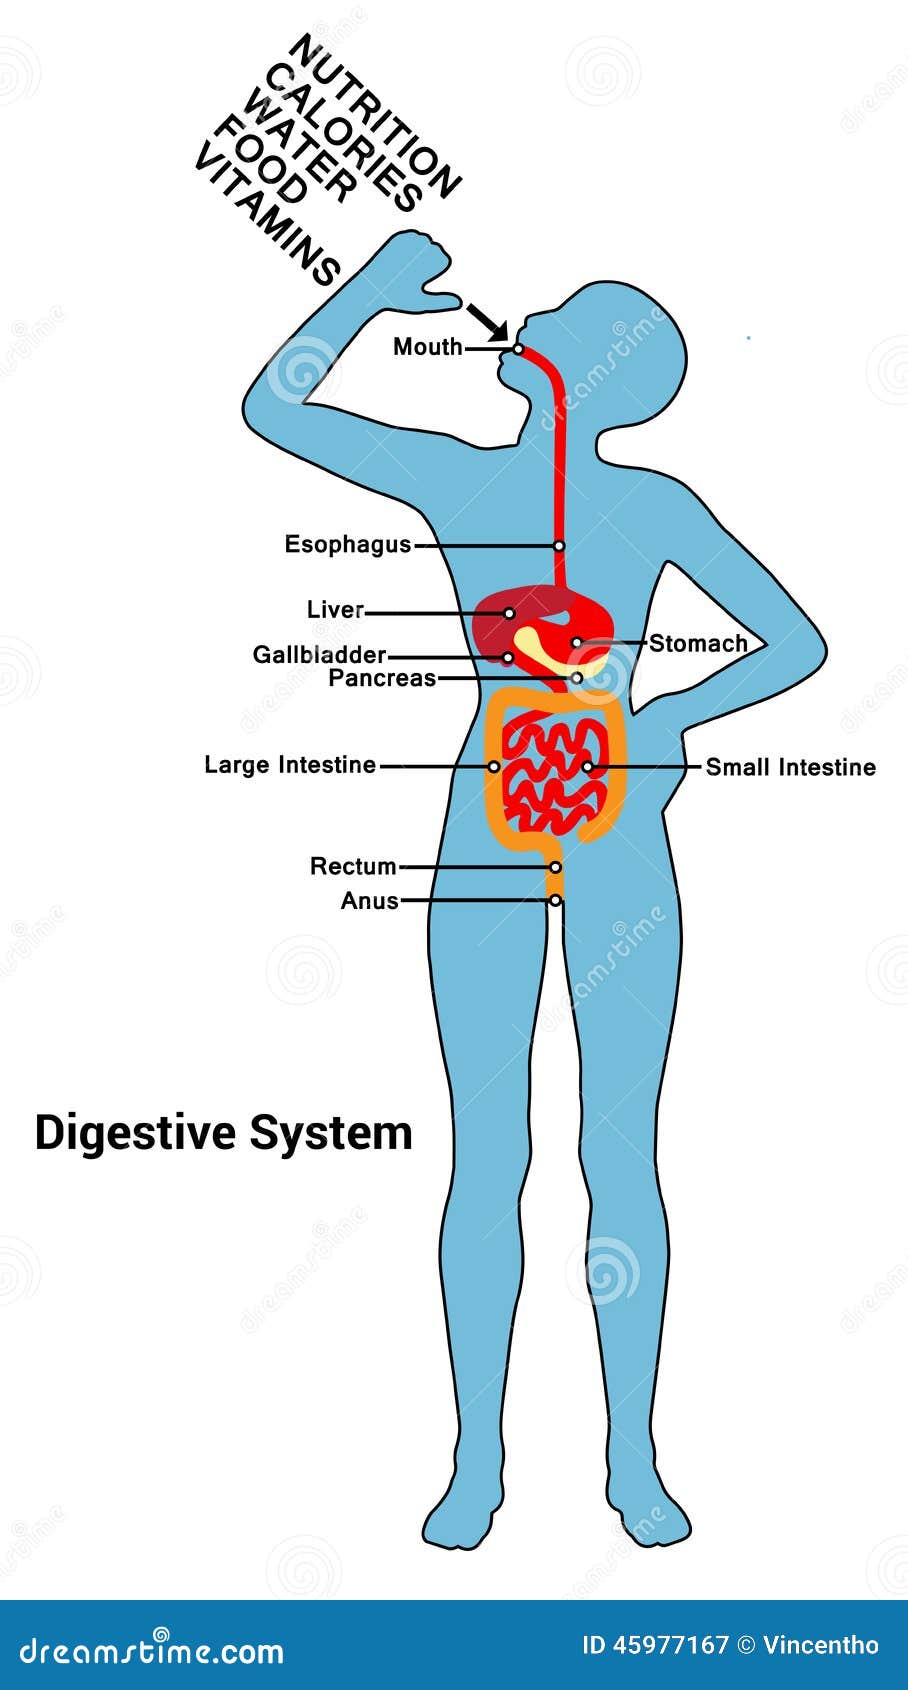 Human Digestive System Diagram Illustration Stock Vector - Image: 45977167